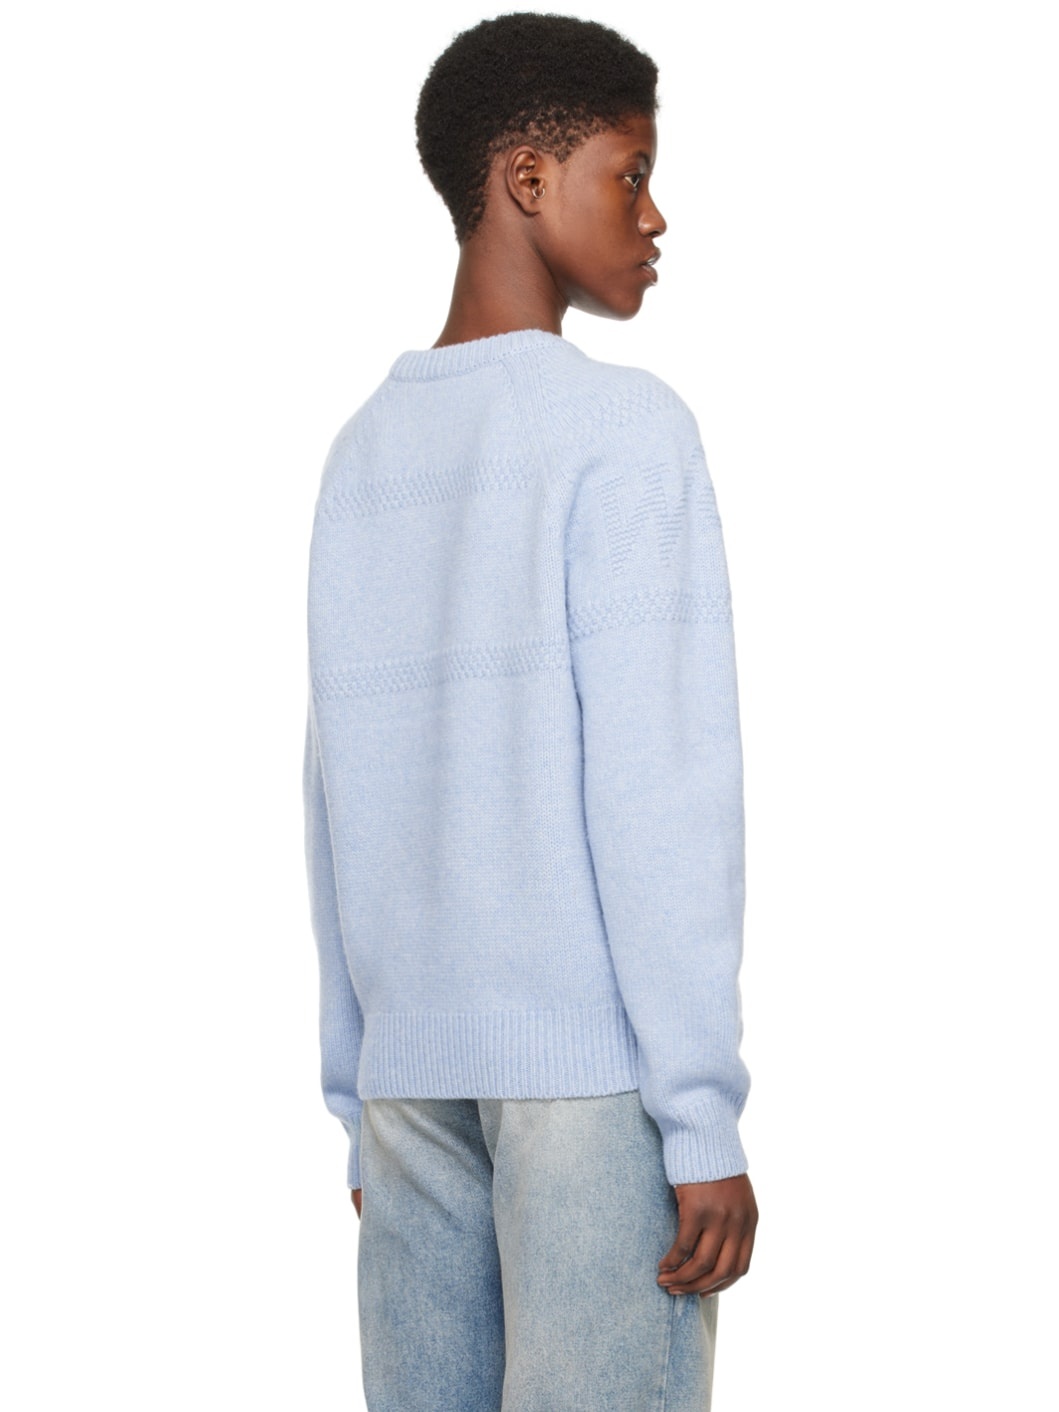 Blue Jacquard Sweater - 3